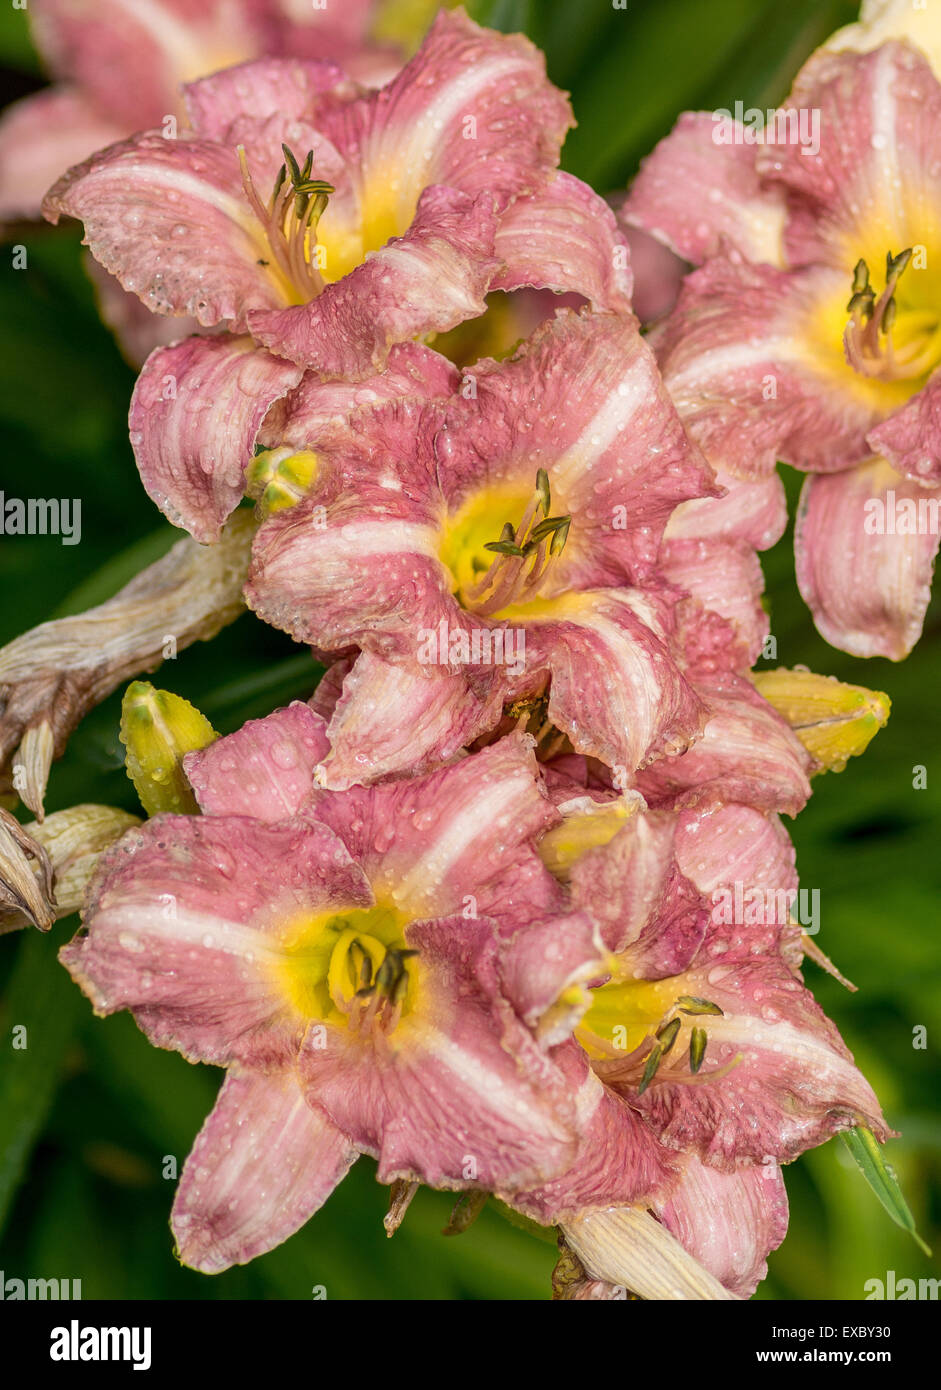 Burgundy yellow lilies in raindrops Hemerocallis Stock Photo